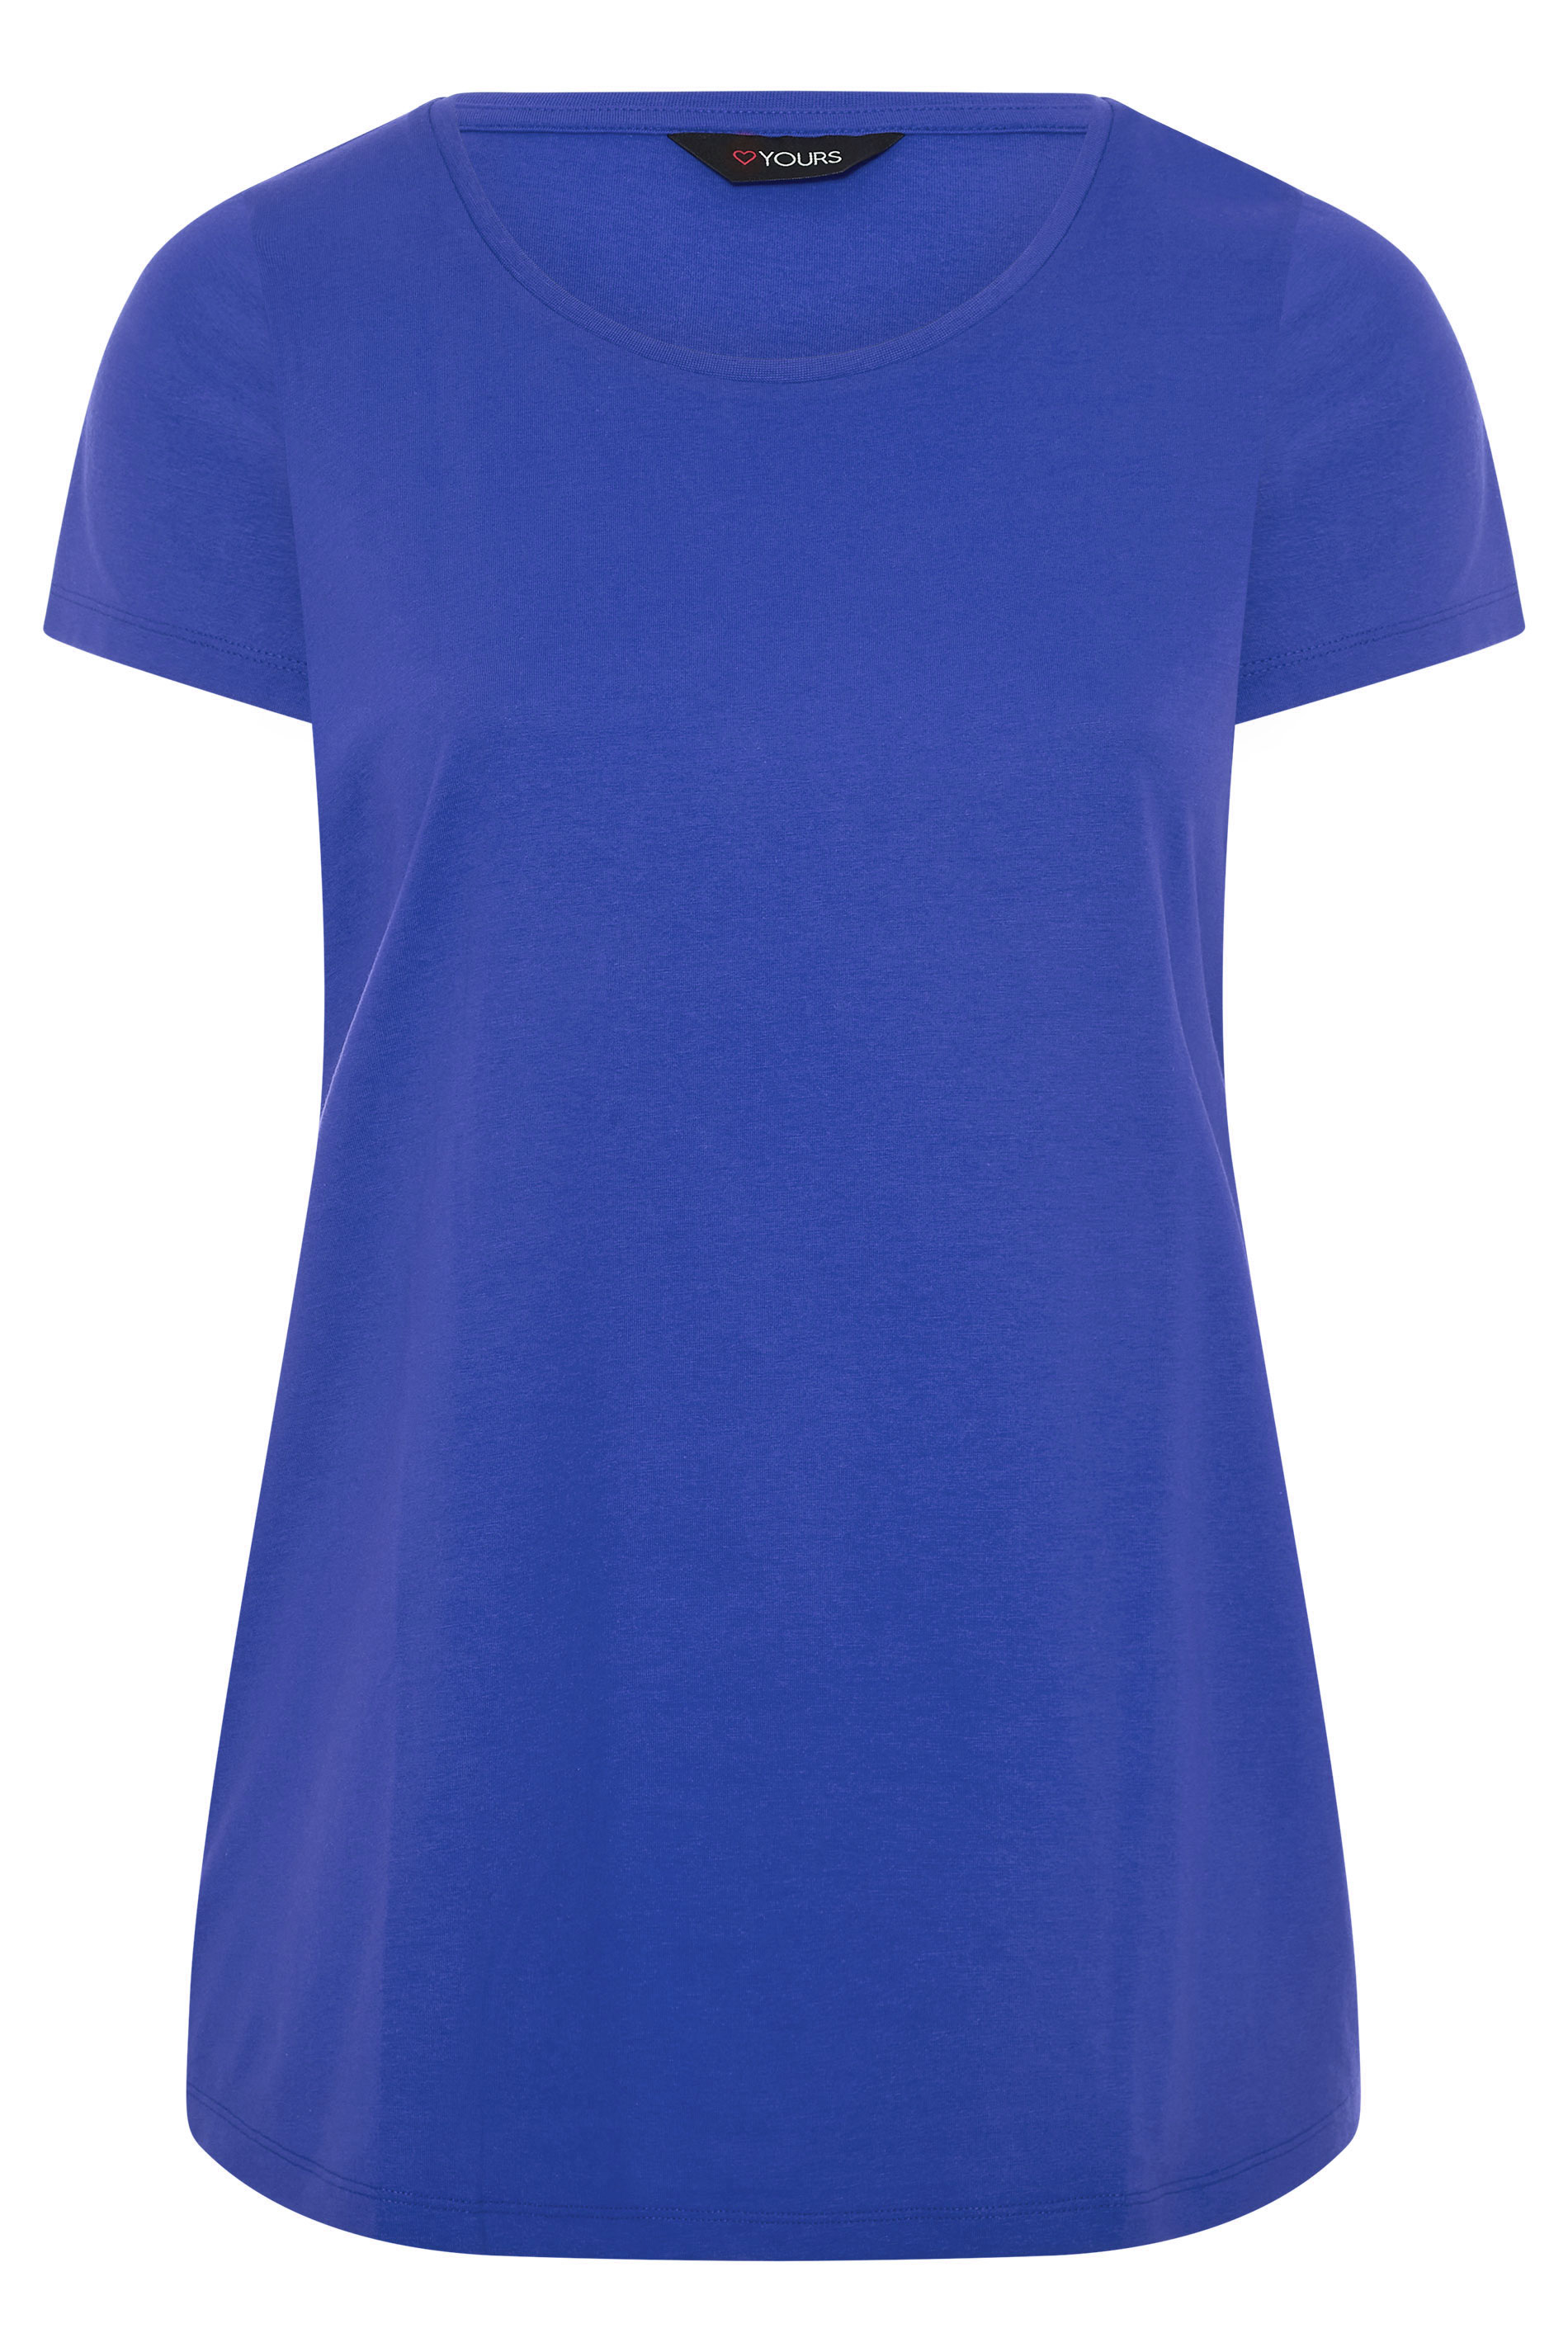 Cobalt Blue T-Shirt | Yours Clothing